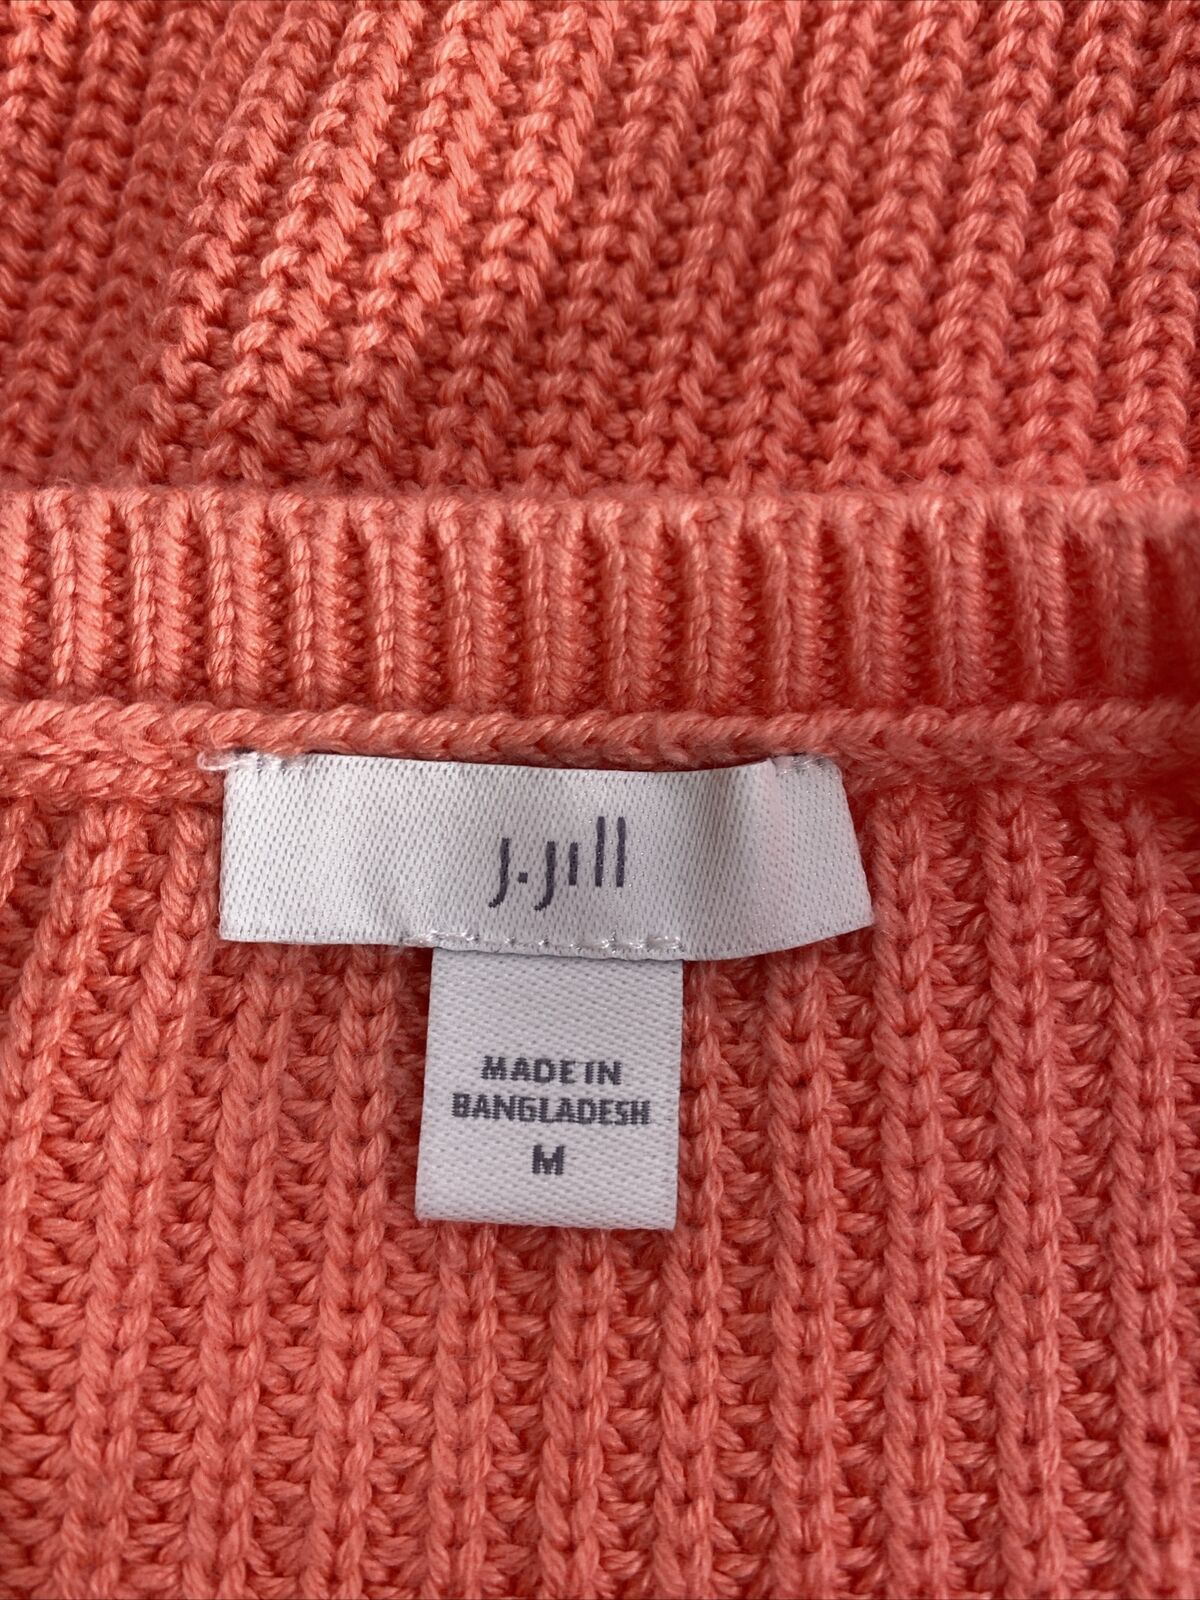 J.Jill Women's Pink/Coral Long Sleeve Pullover Sweater - M